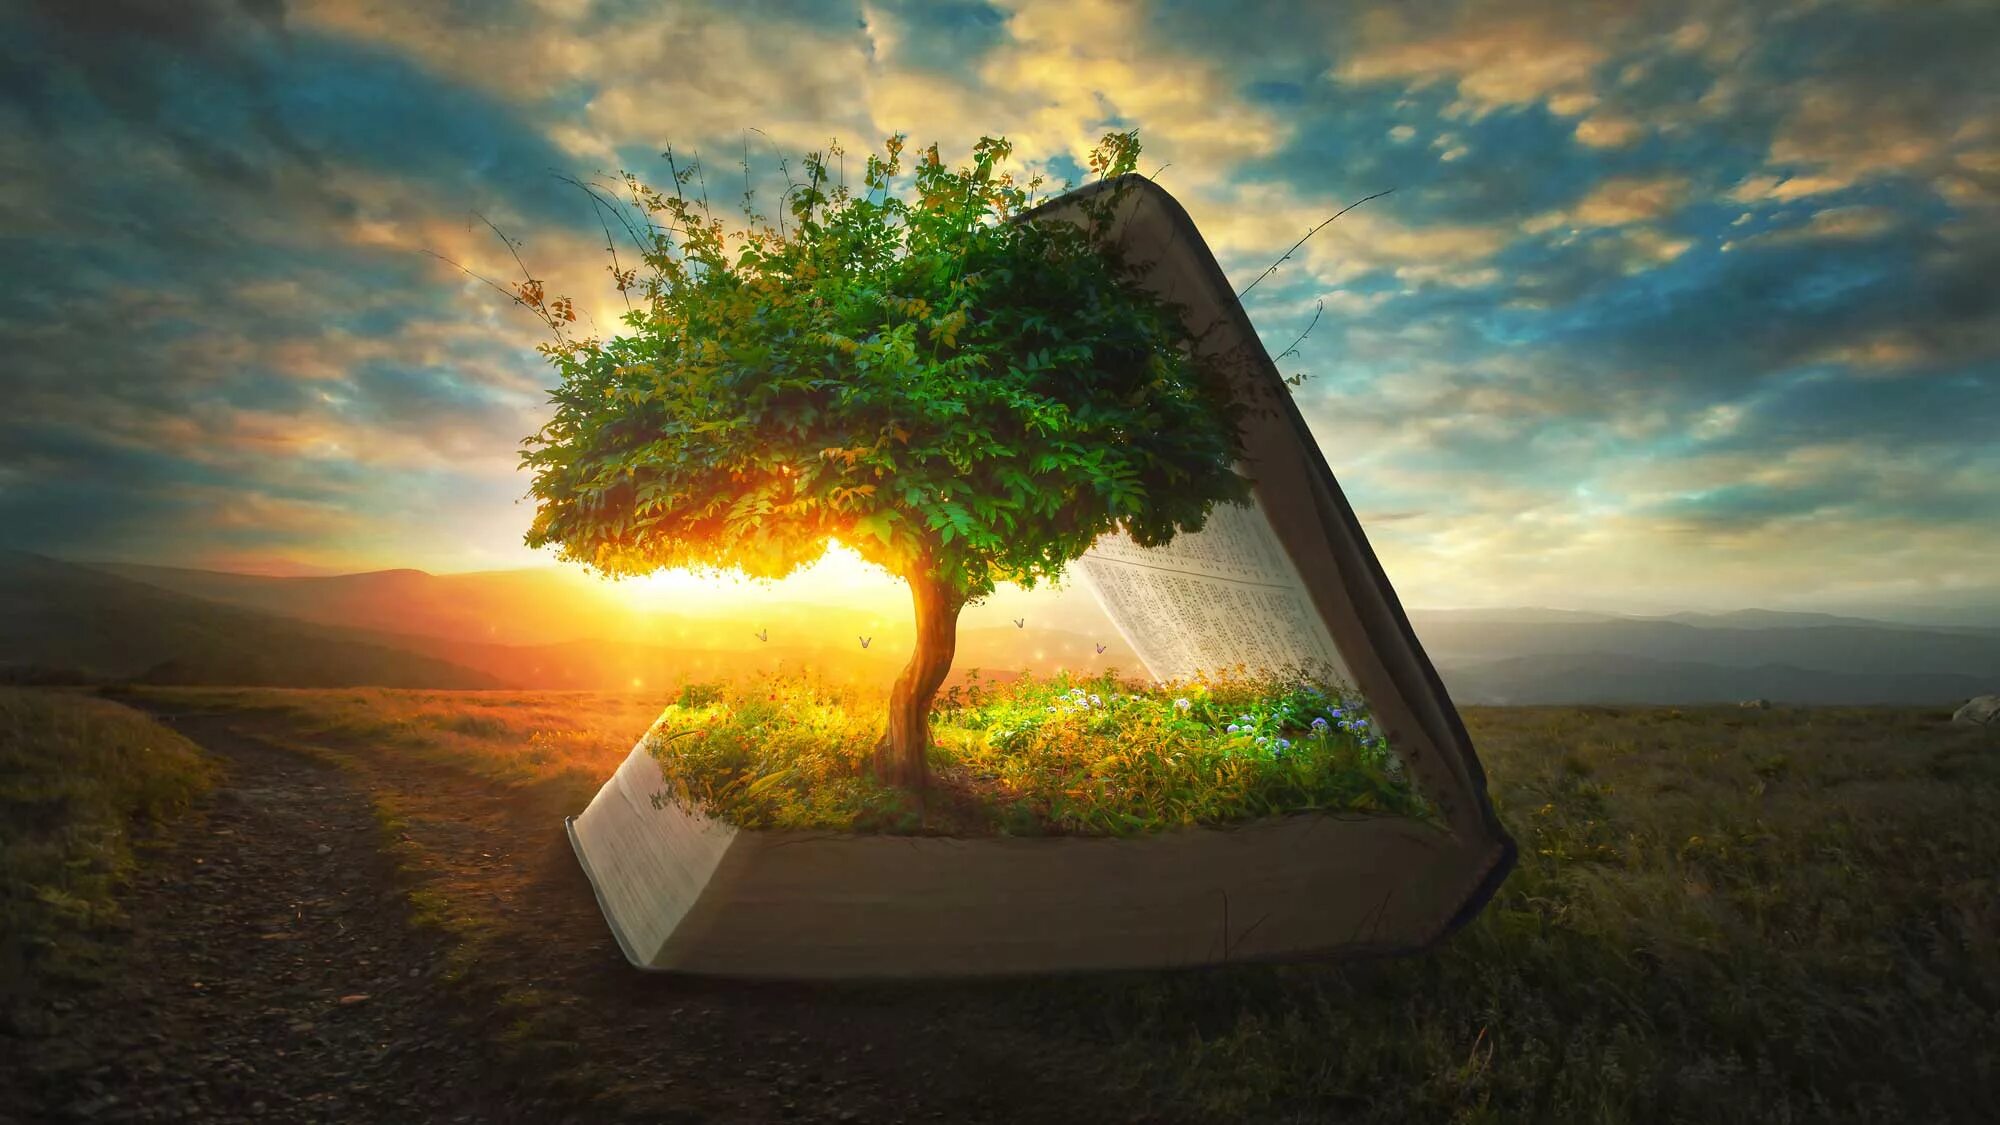 Выбирайте дерево и живите. Дерево с книгами. Дерево познания. Дерево сознания. Дерево жизни.